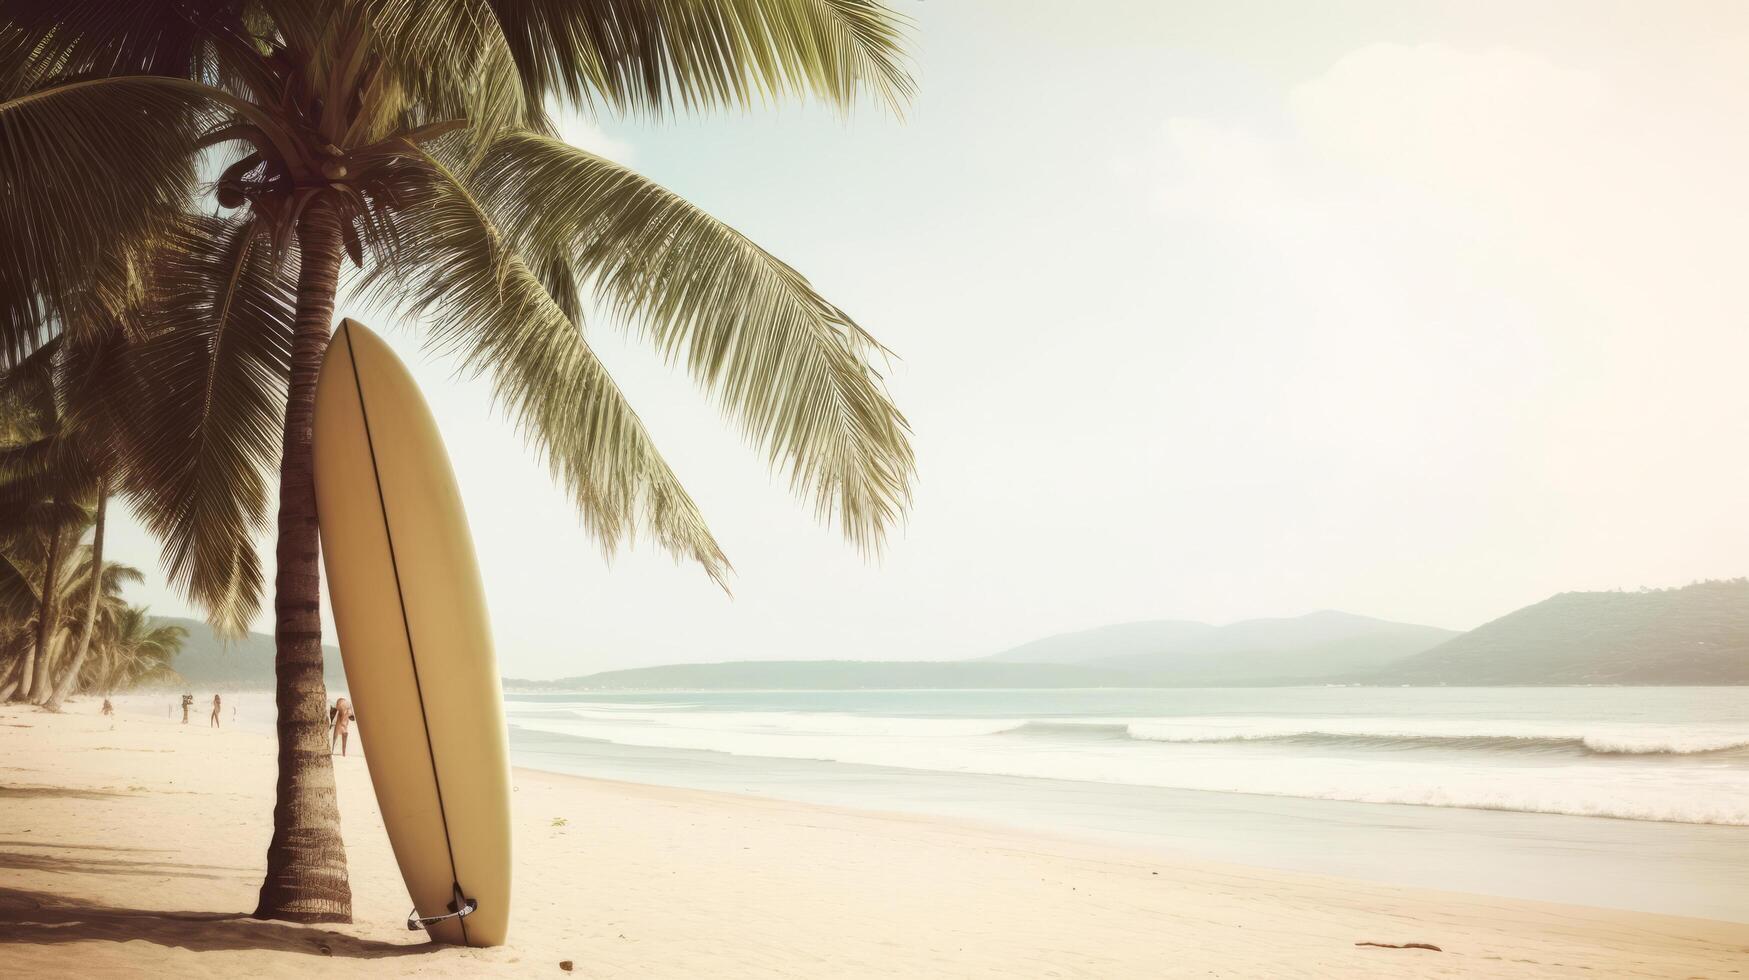 Surf board background. Illustration photo